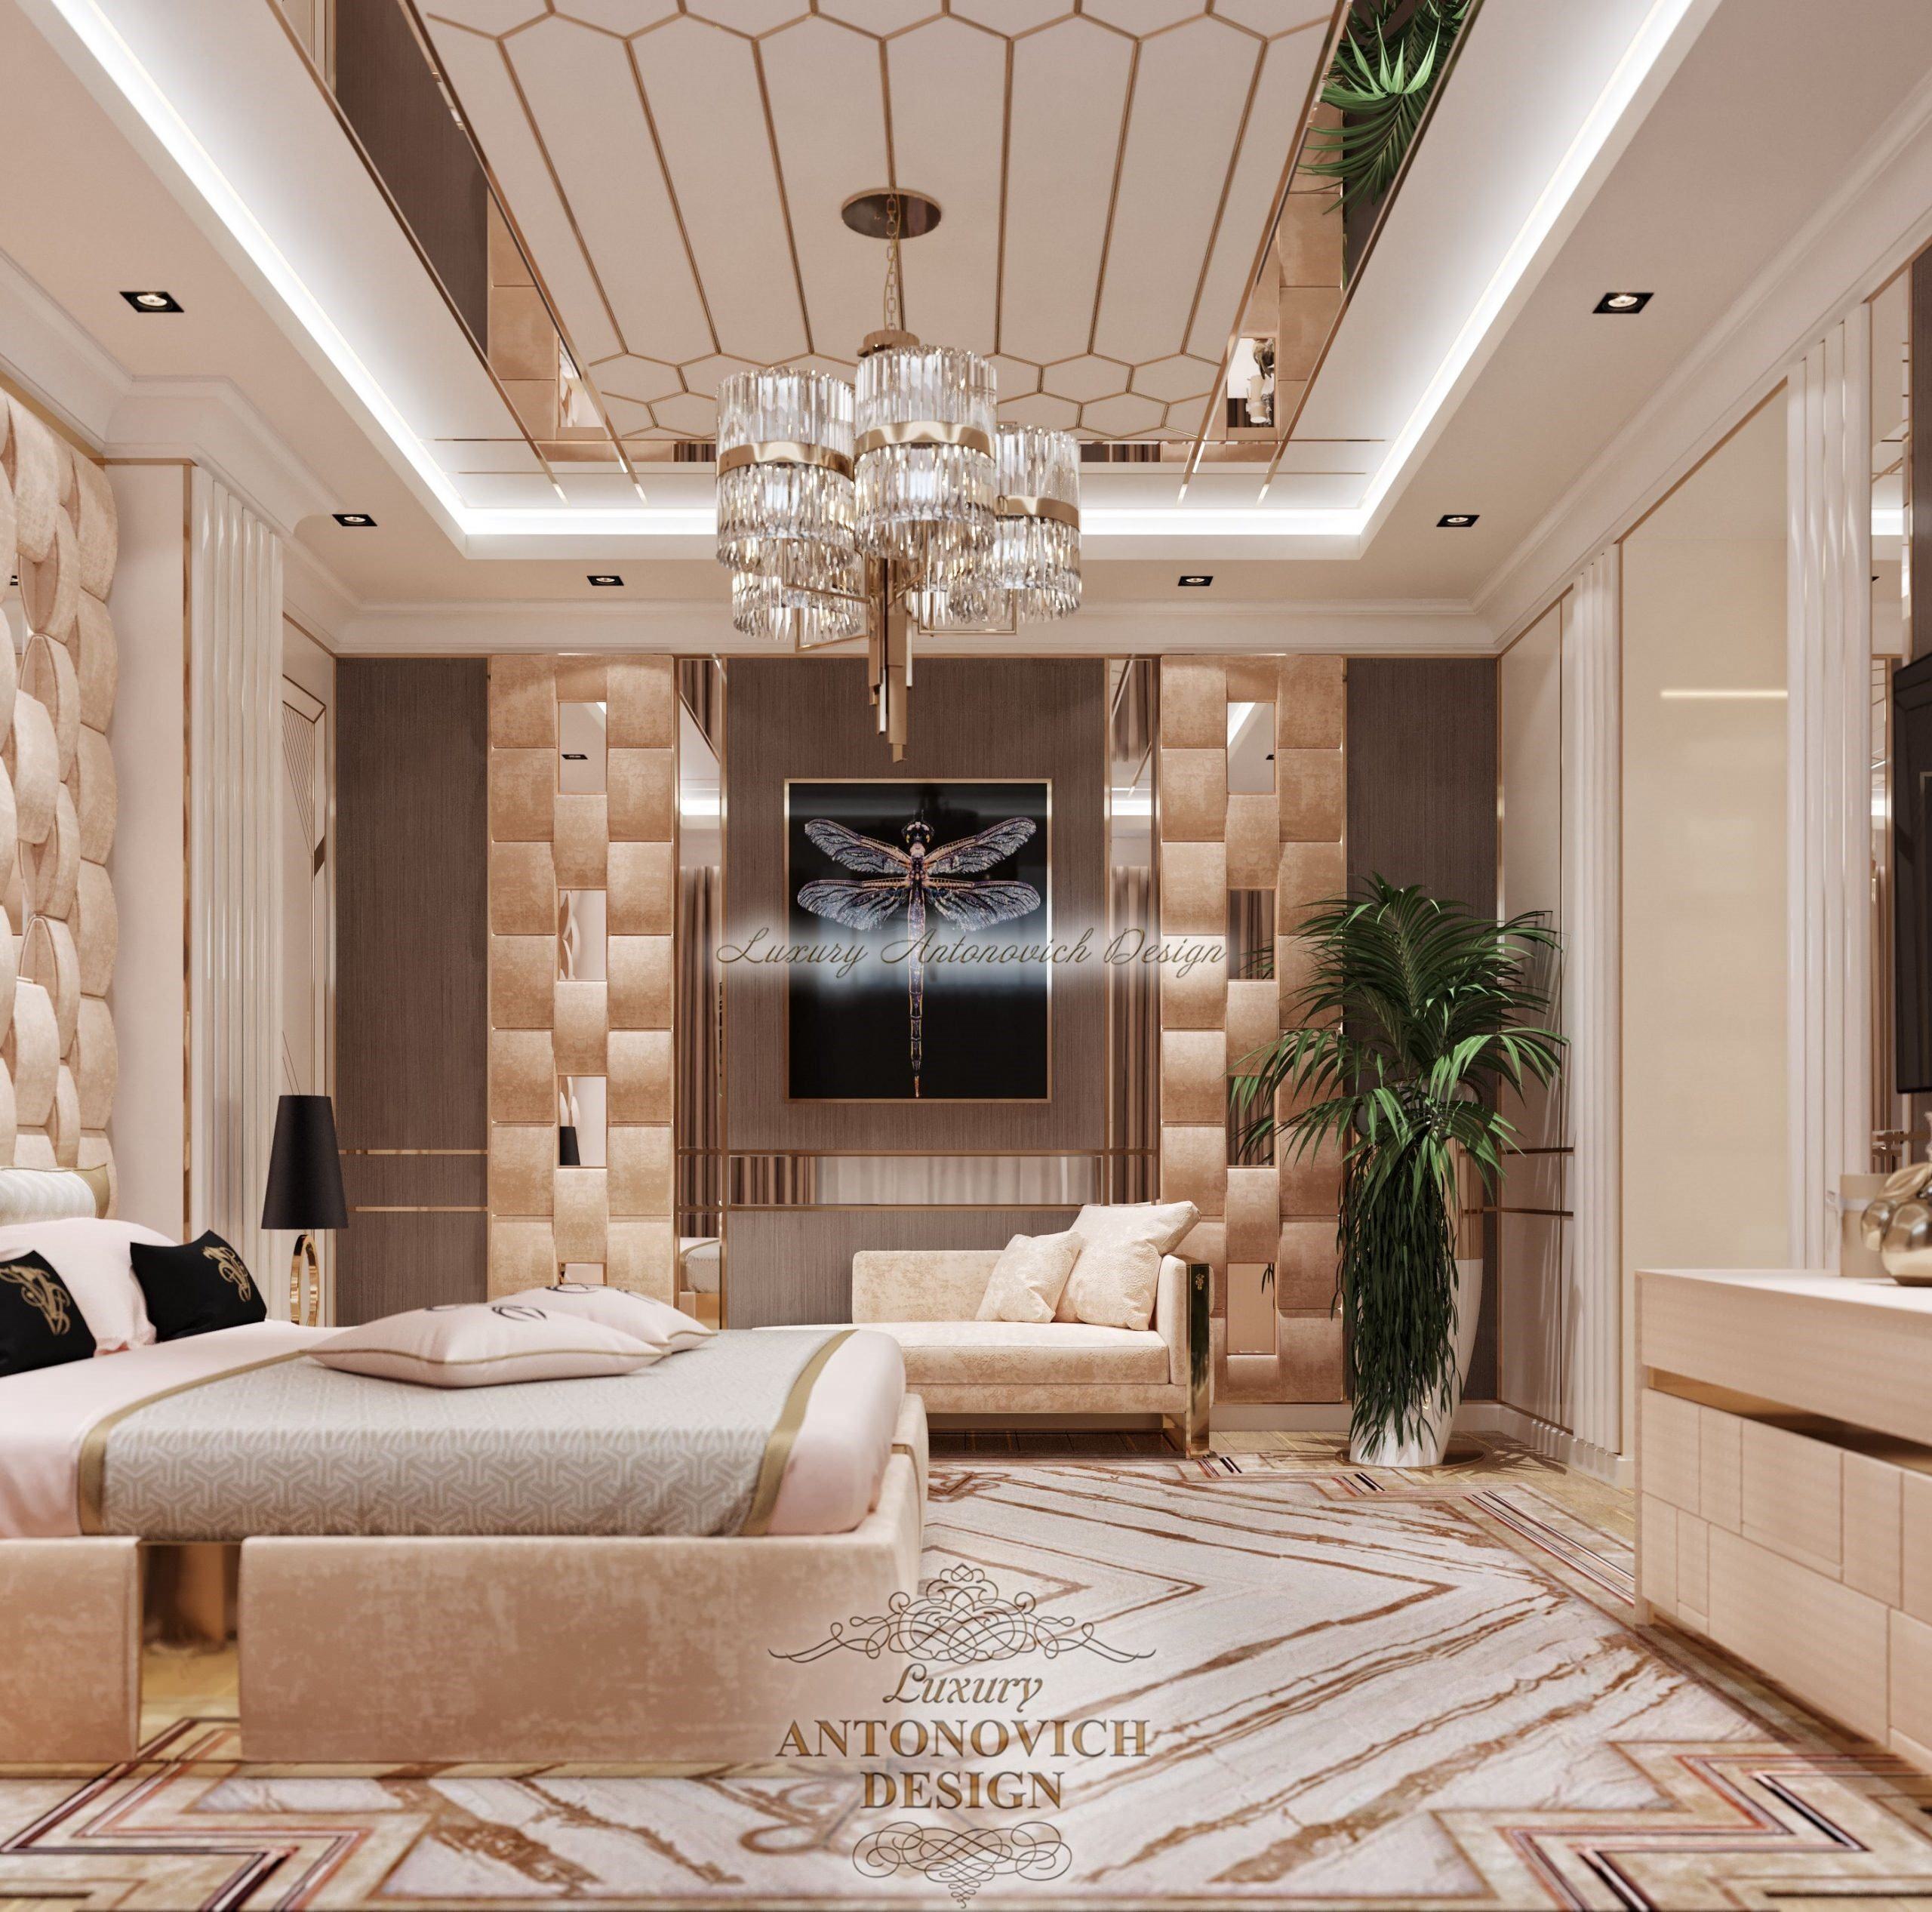 Luxury Antonovich Design интерьер